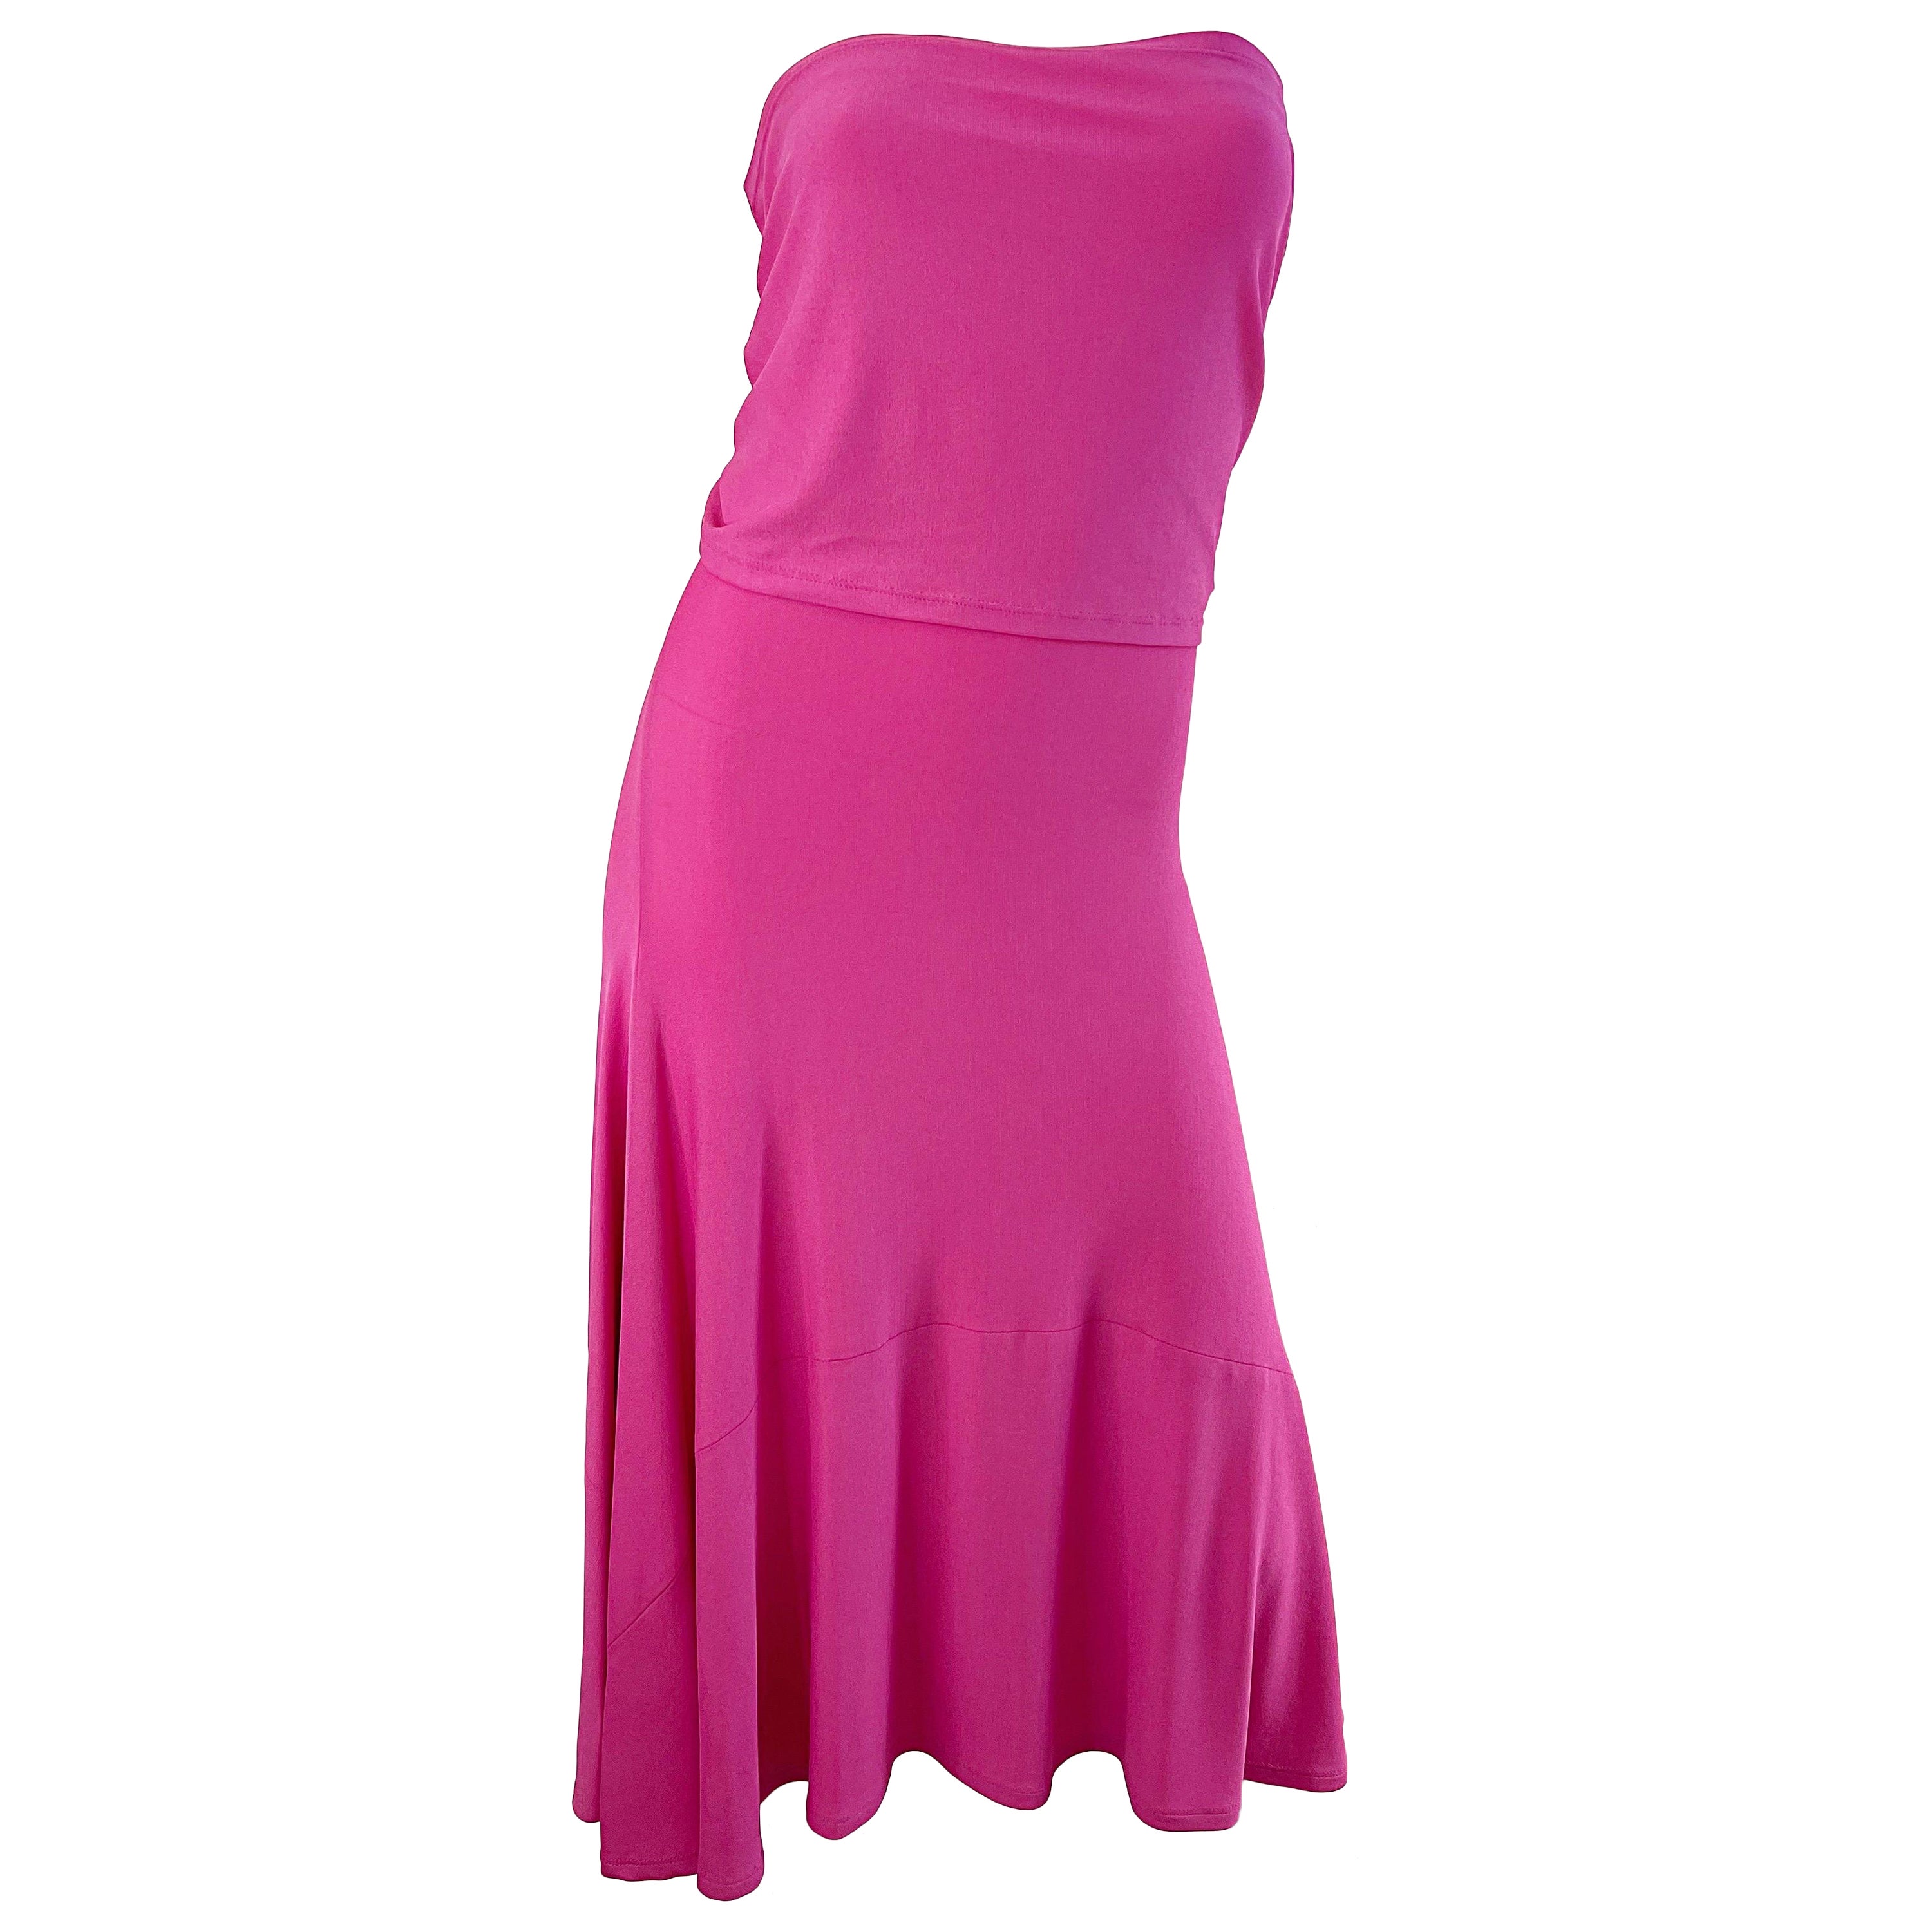 NWT Donna Karan Resort 2016 Hot Pink Size Medium Strapless Tube Dress For Sale